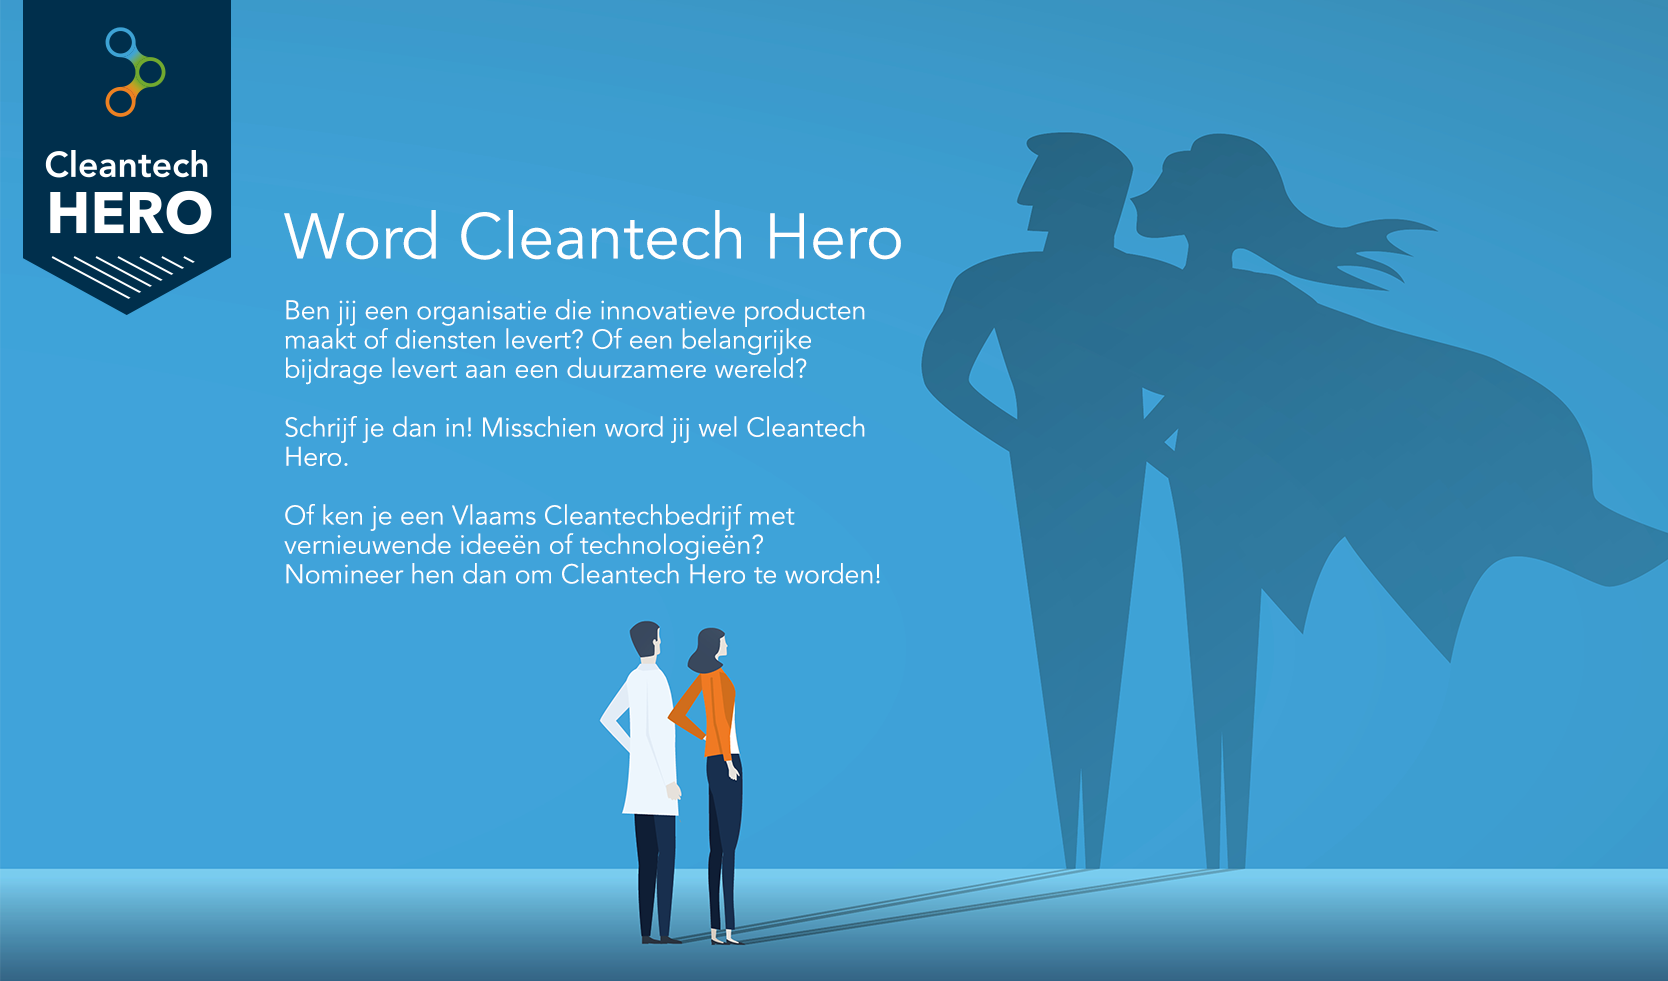 Cleantech Hero water